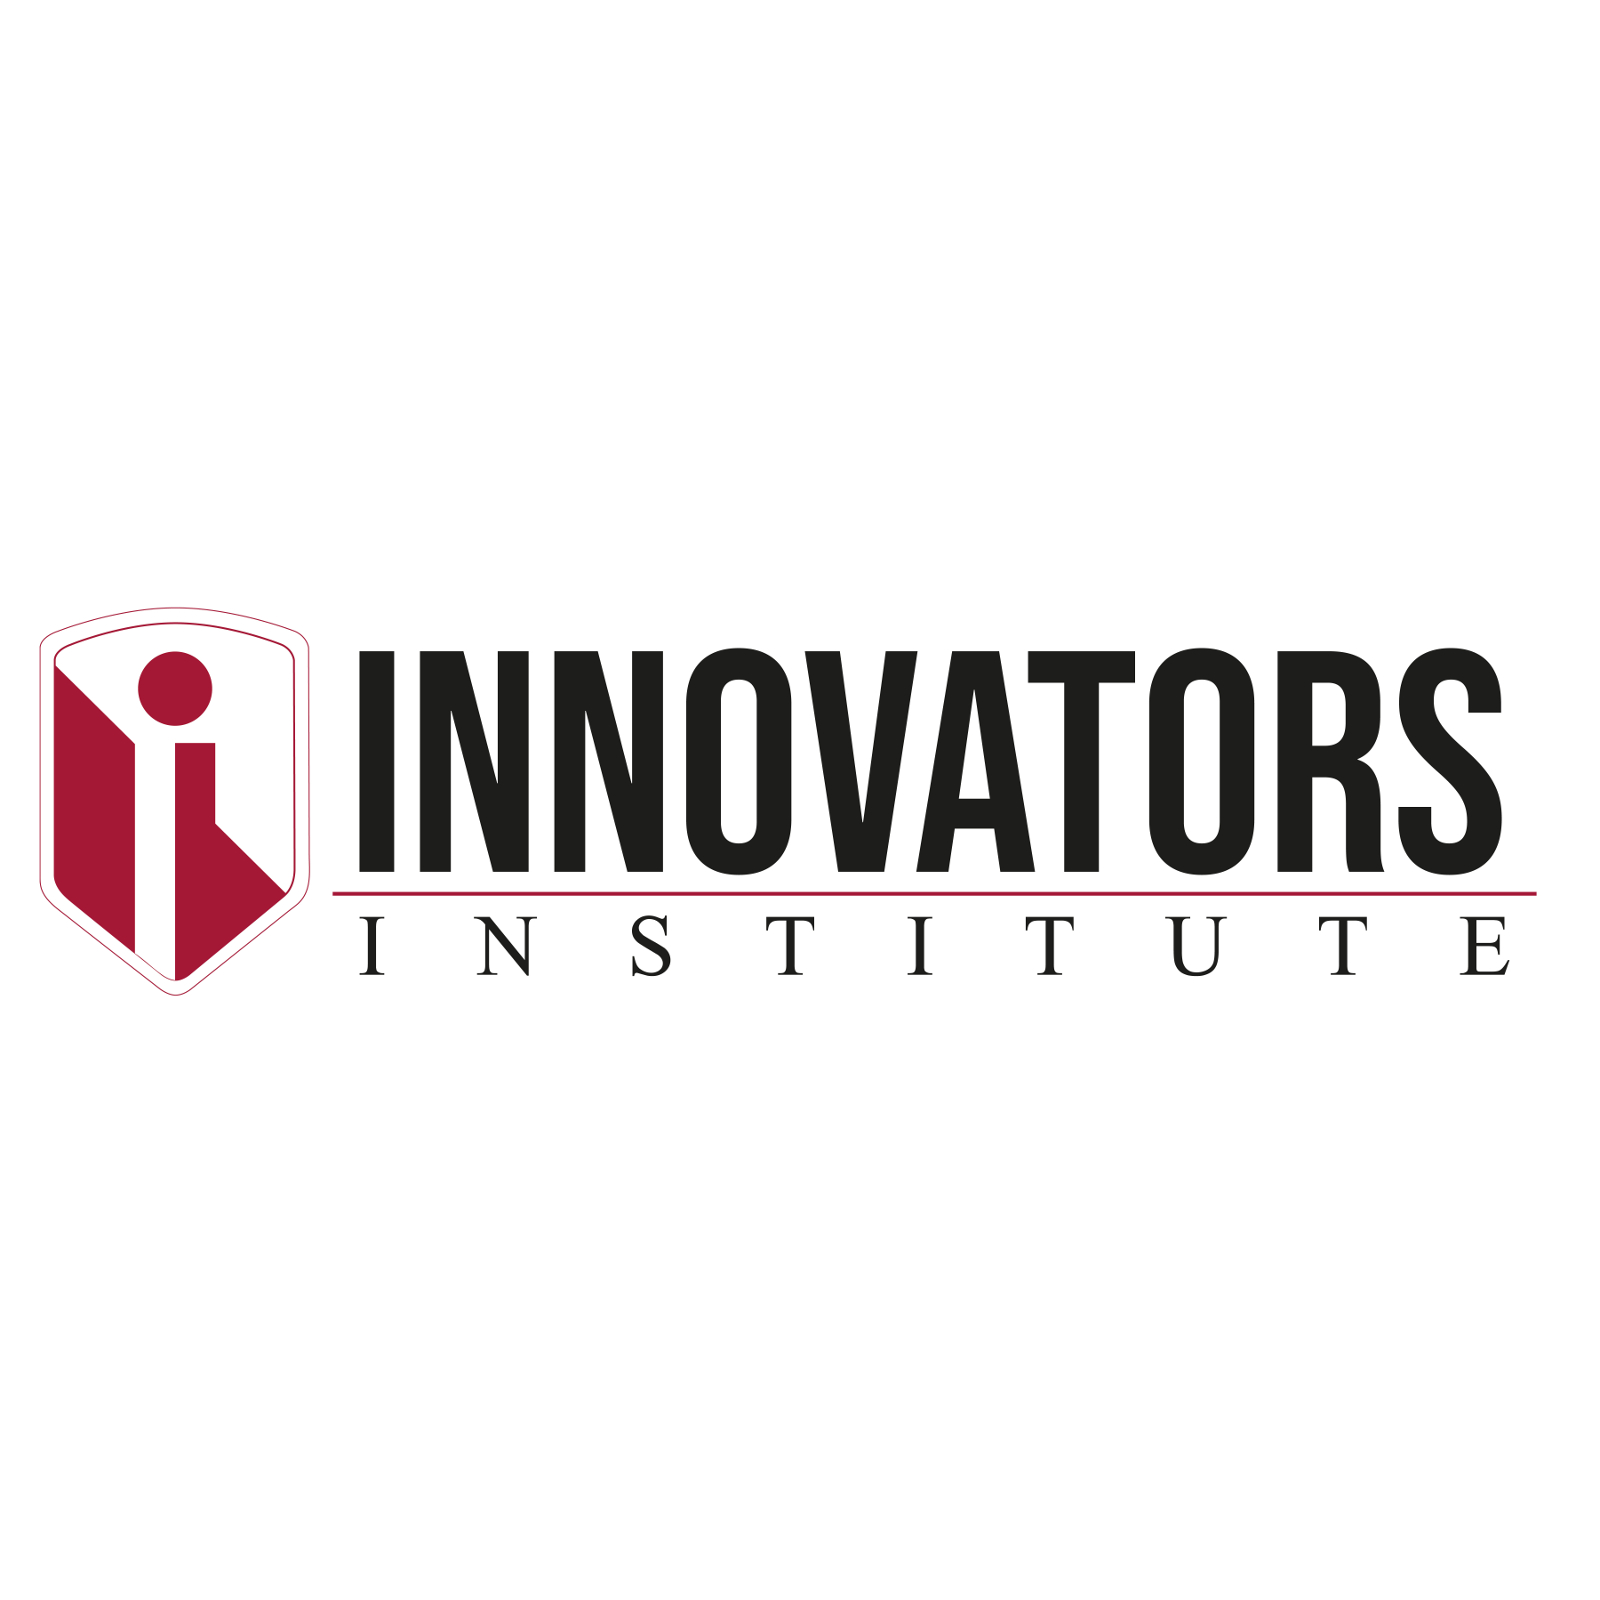 Innovators Institute - Great ideas start here.